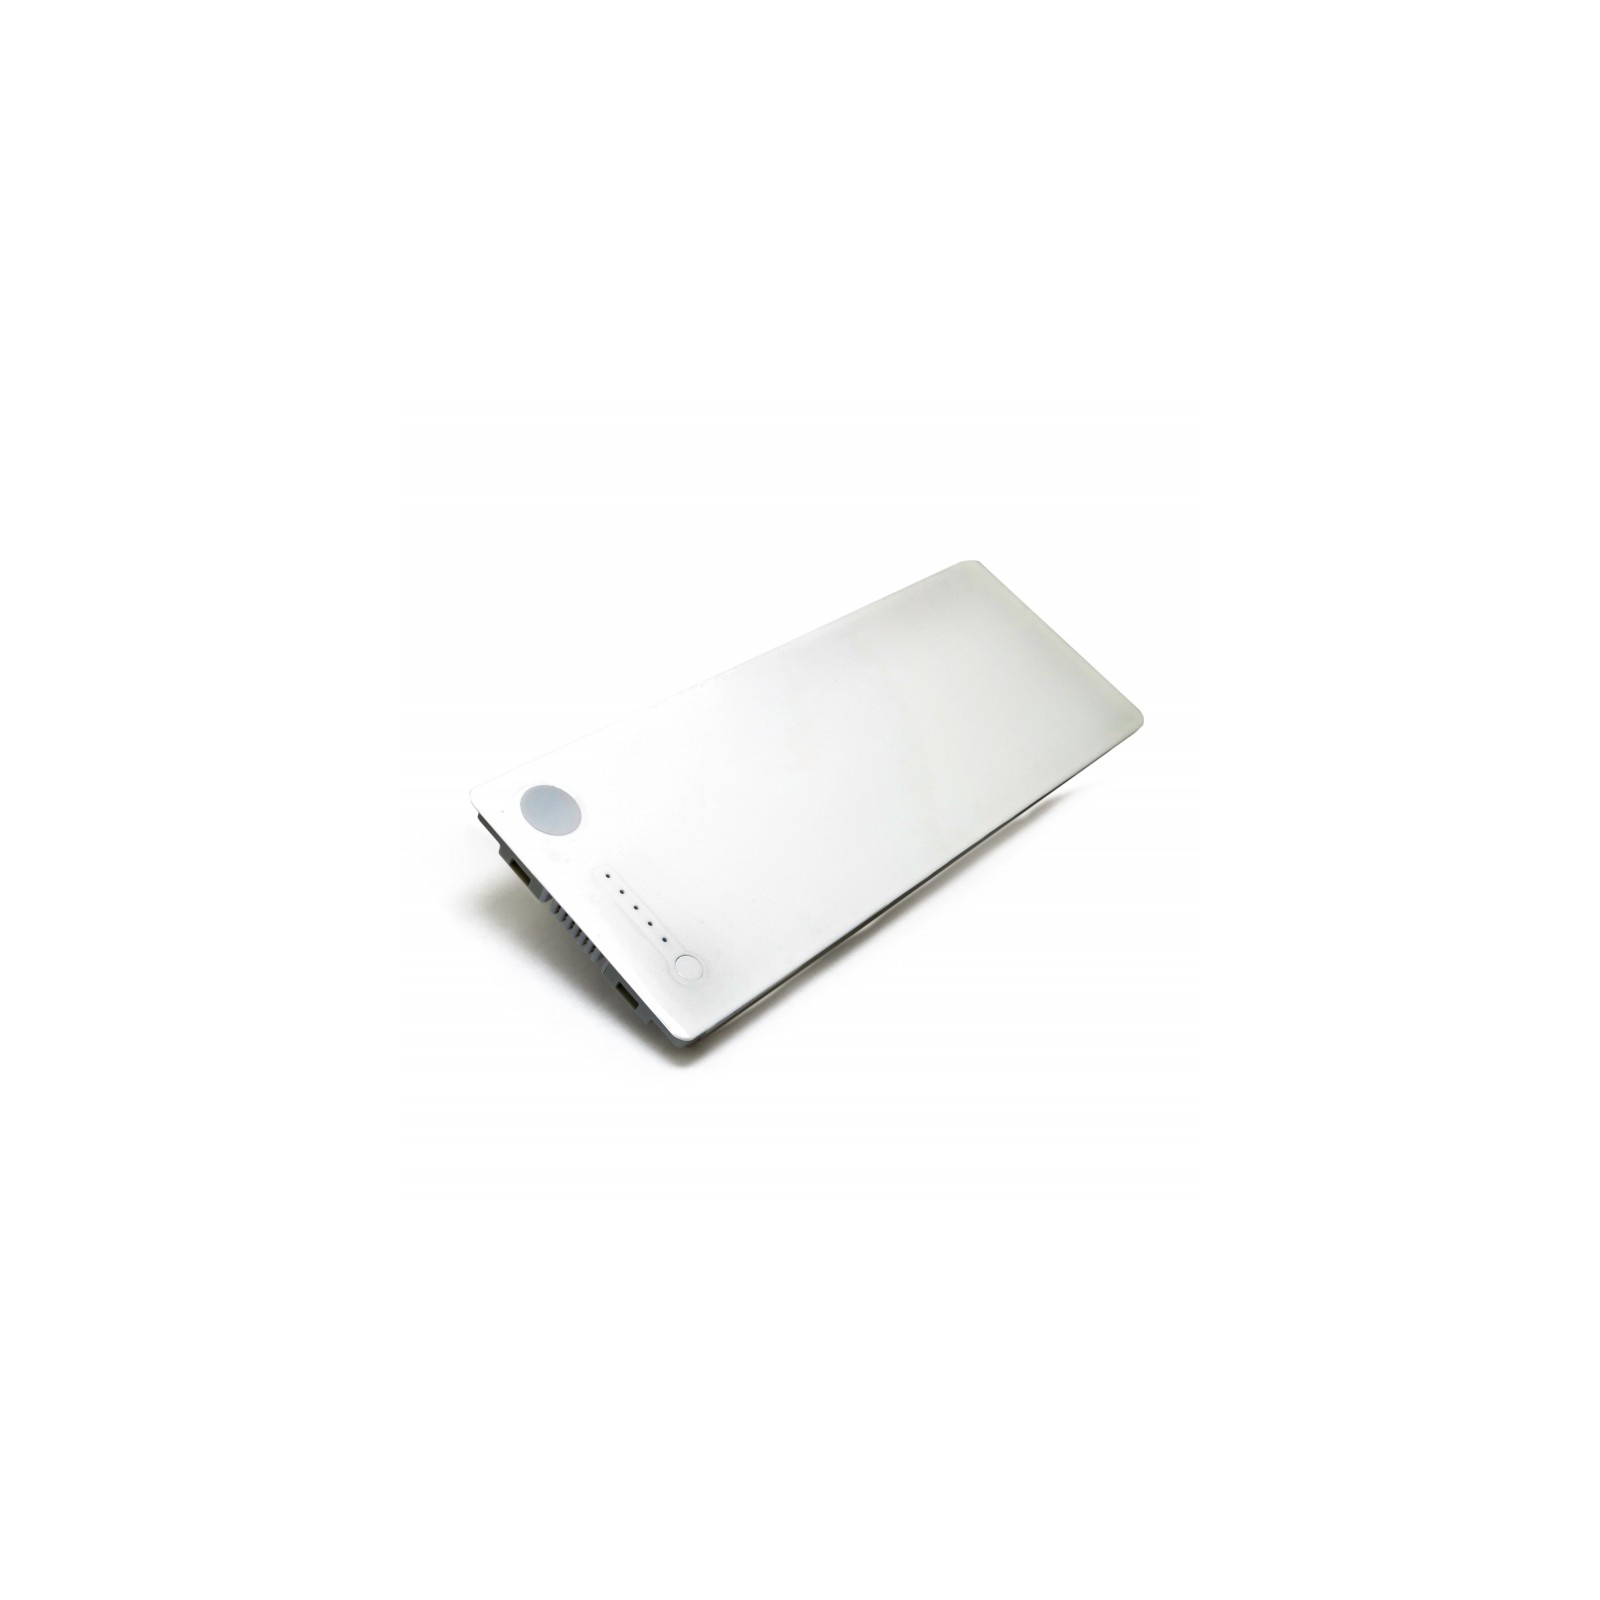 Аккумулятор для ноутбука APPLE A1185 (5550 mAh) White Extradigital (BNA3901) изображение 2